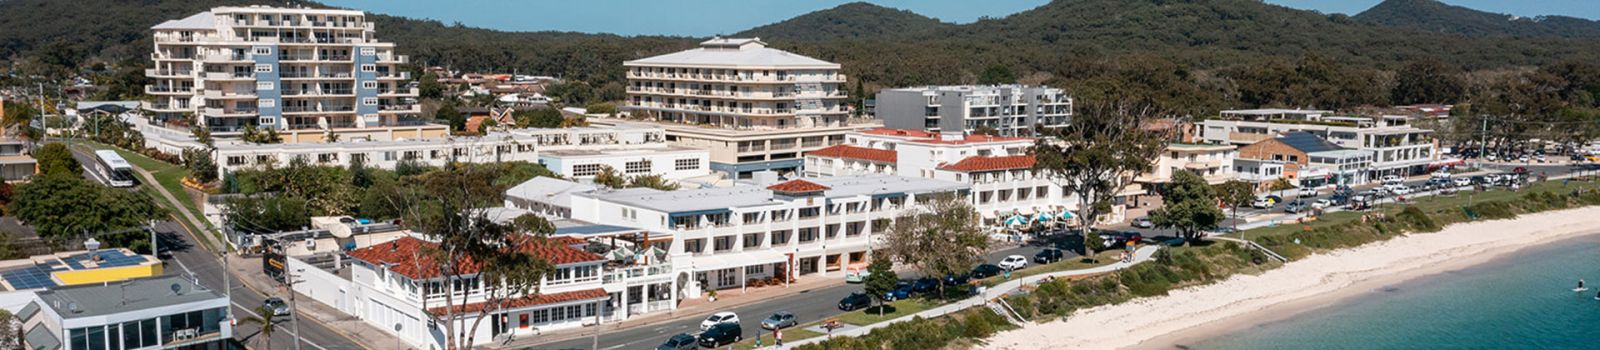 Image overlooking Port Stephens development banner image